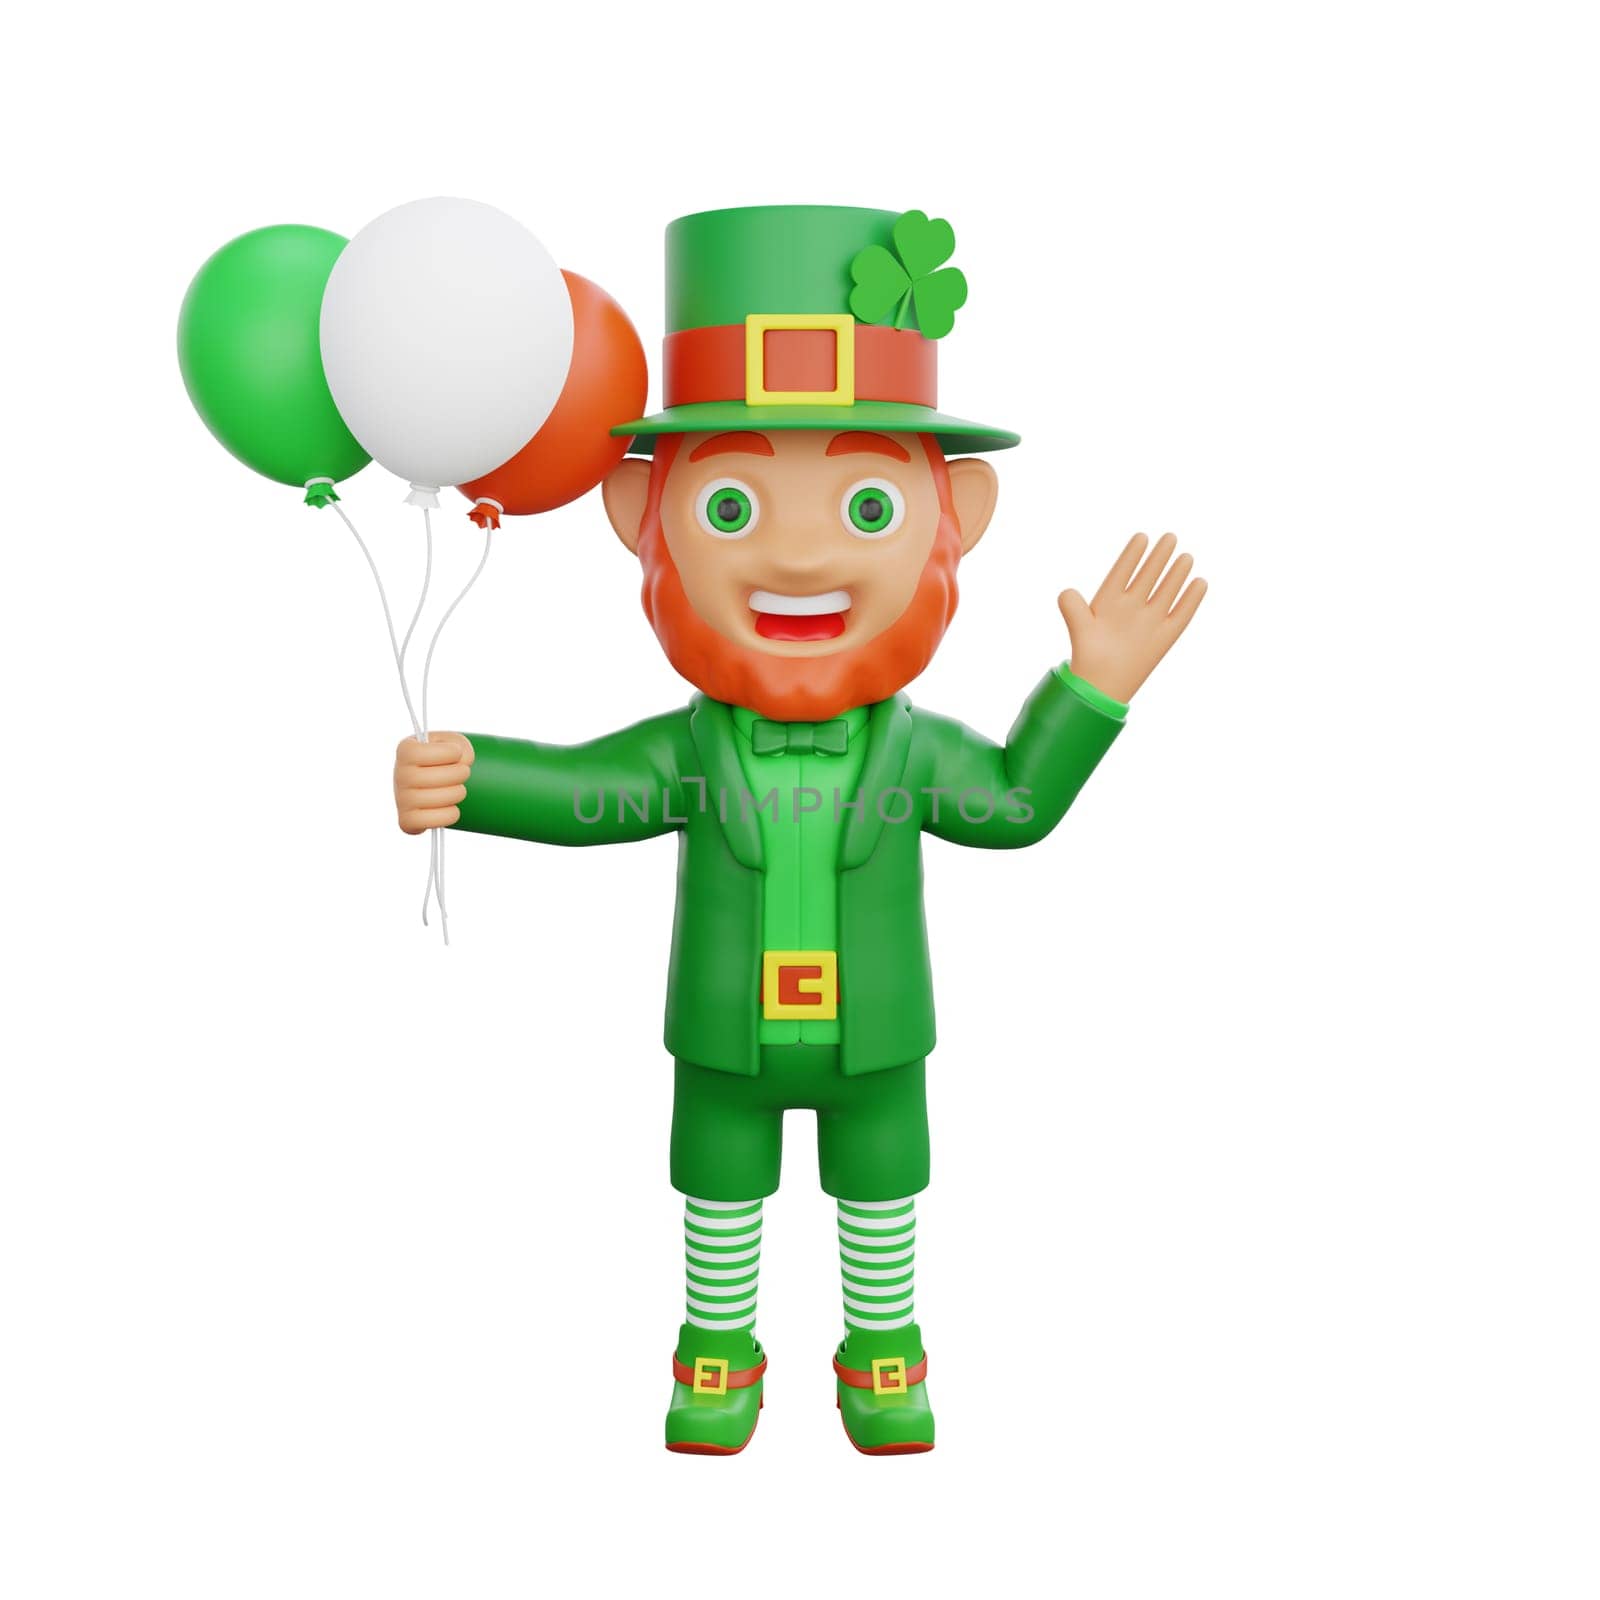 3D illustration of St. Patrick's Day character leprechaun waves hello while holding balloons by Rahmat_Djayusman